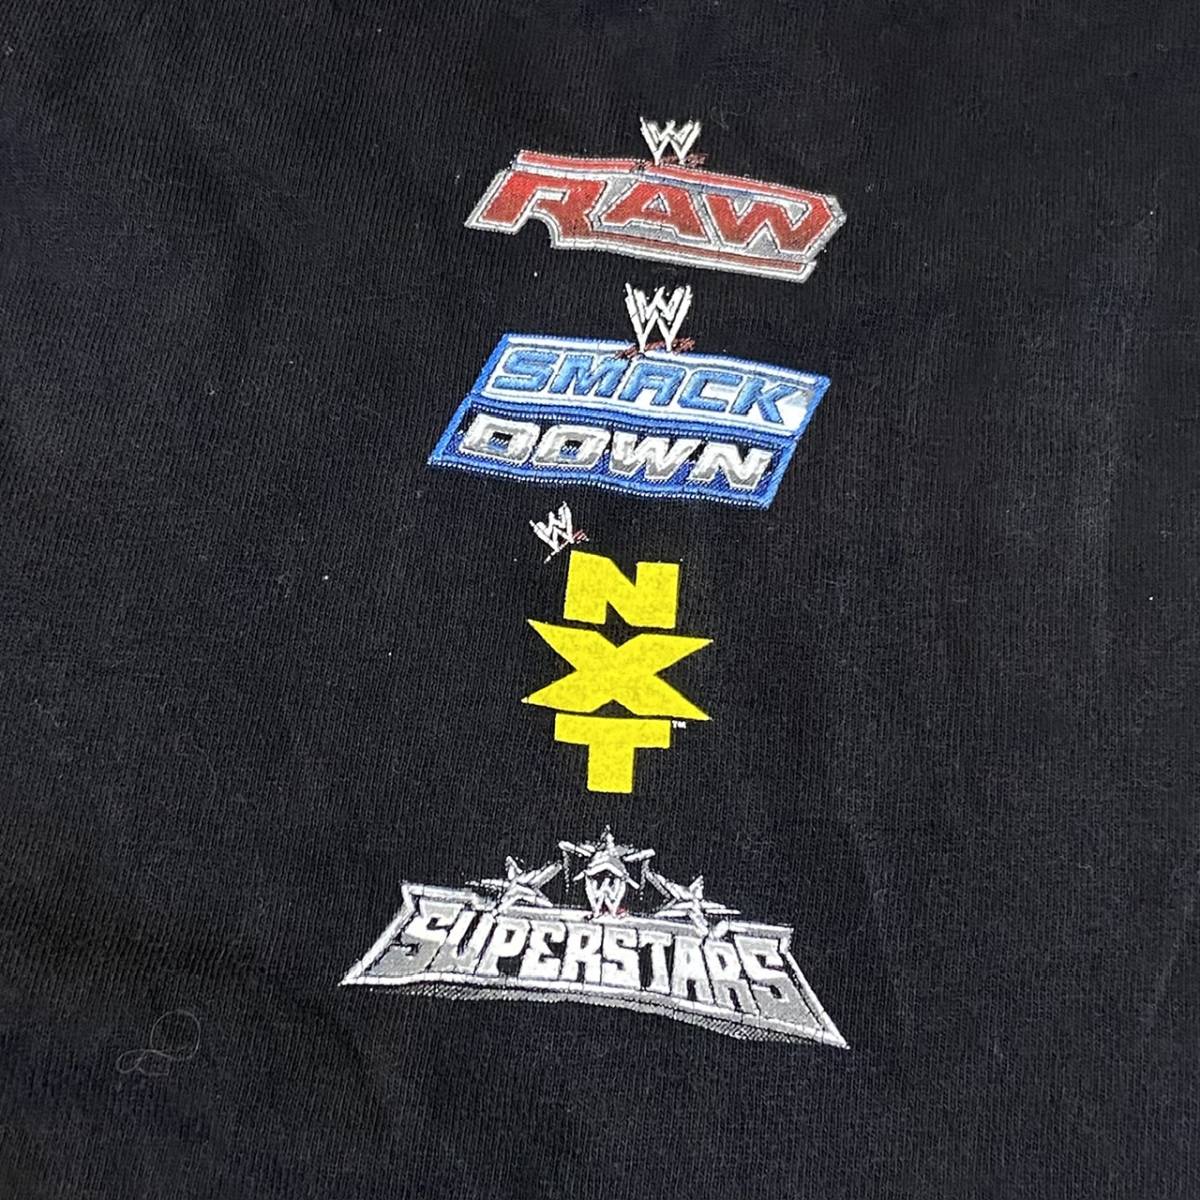 00s WWE プロレス ロゴ Tシャツ 2008年製 XL ブラック SmackDown RAW NXT SUPERSTARS イベント 格闘技 アメプロ WCW WWFの画像4